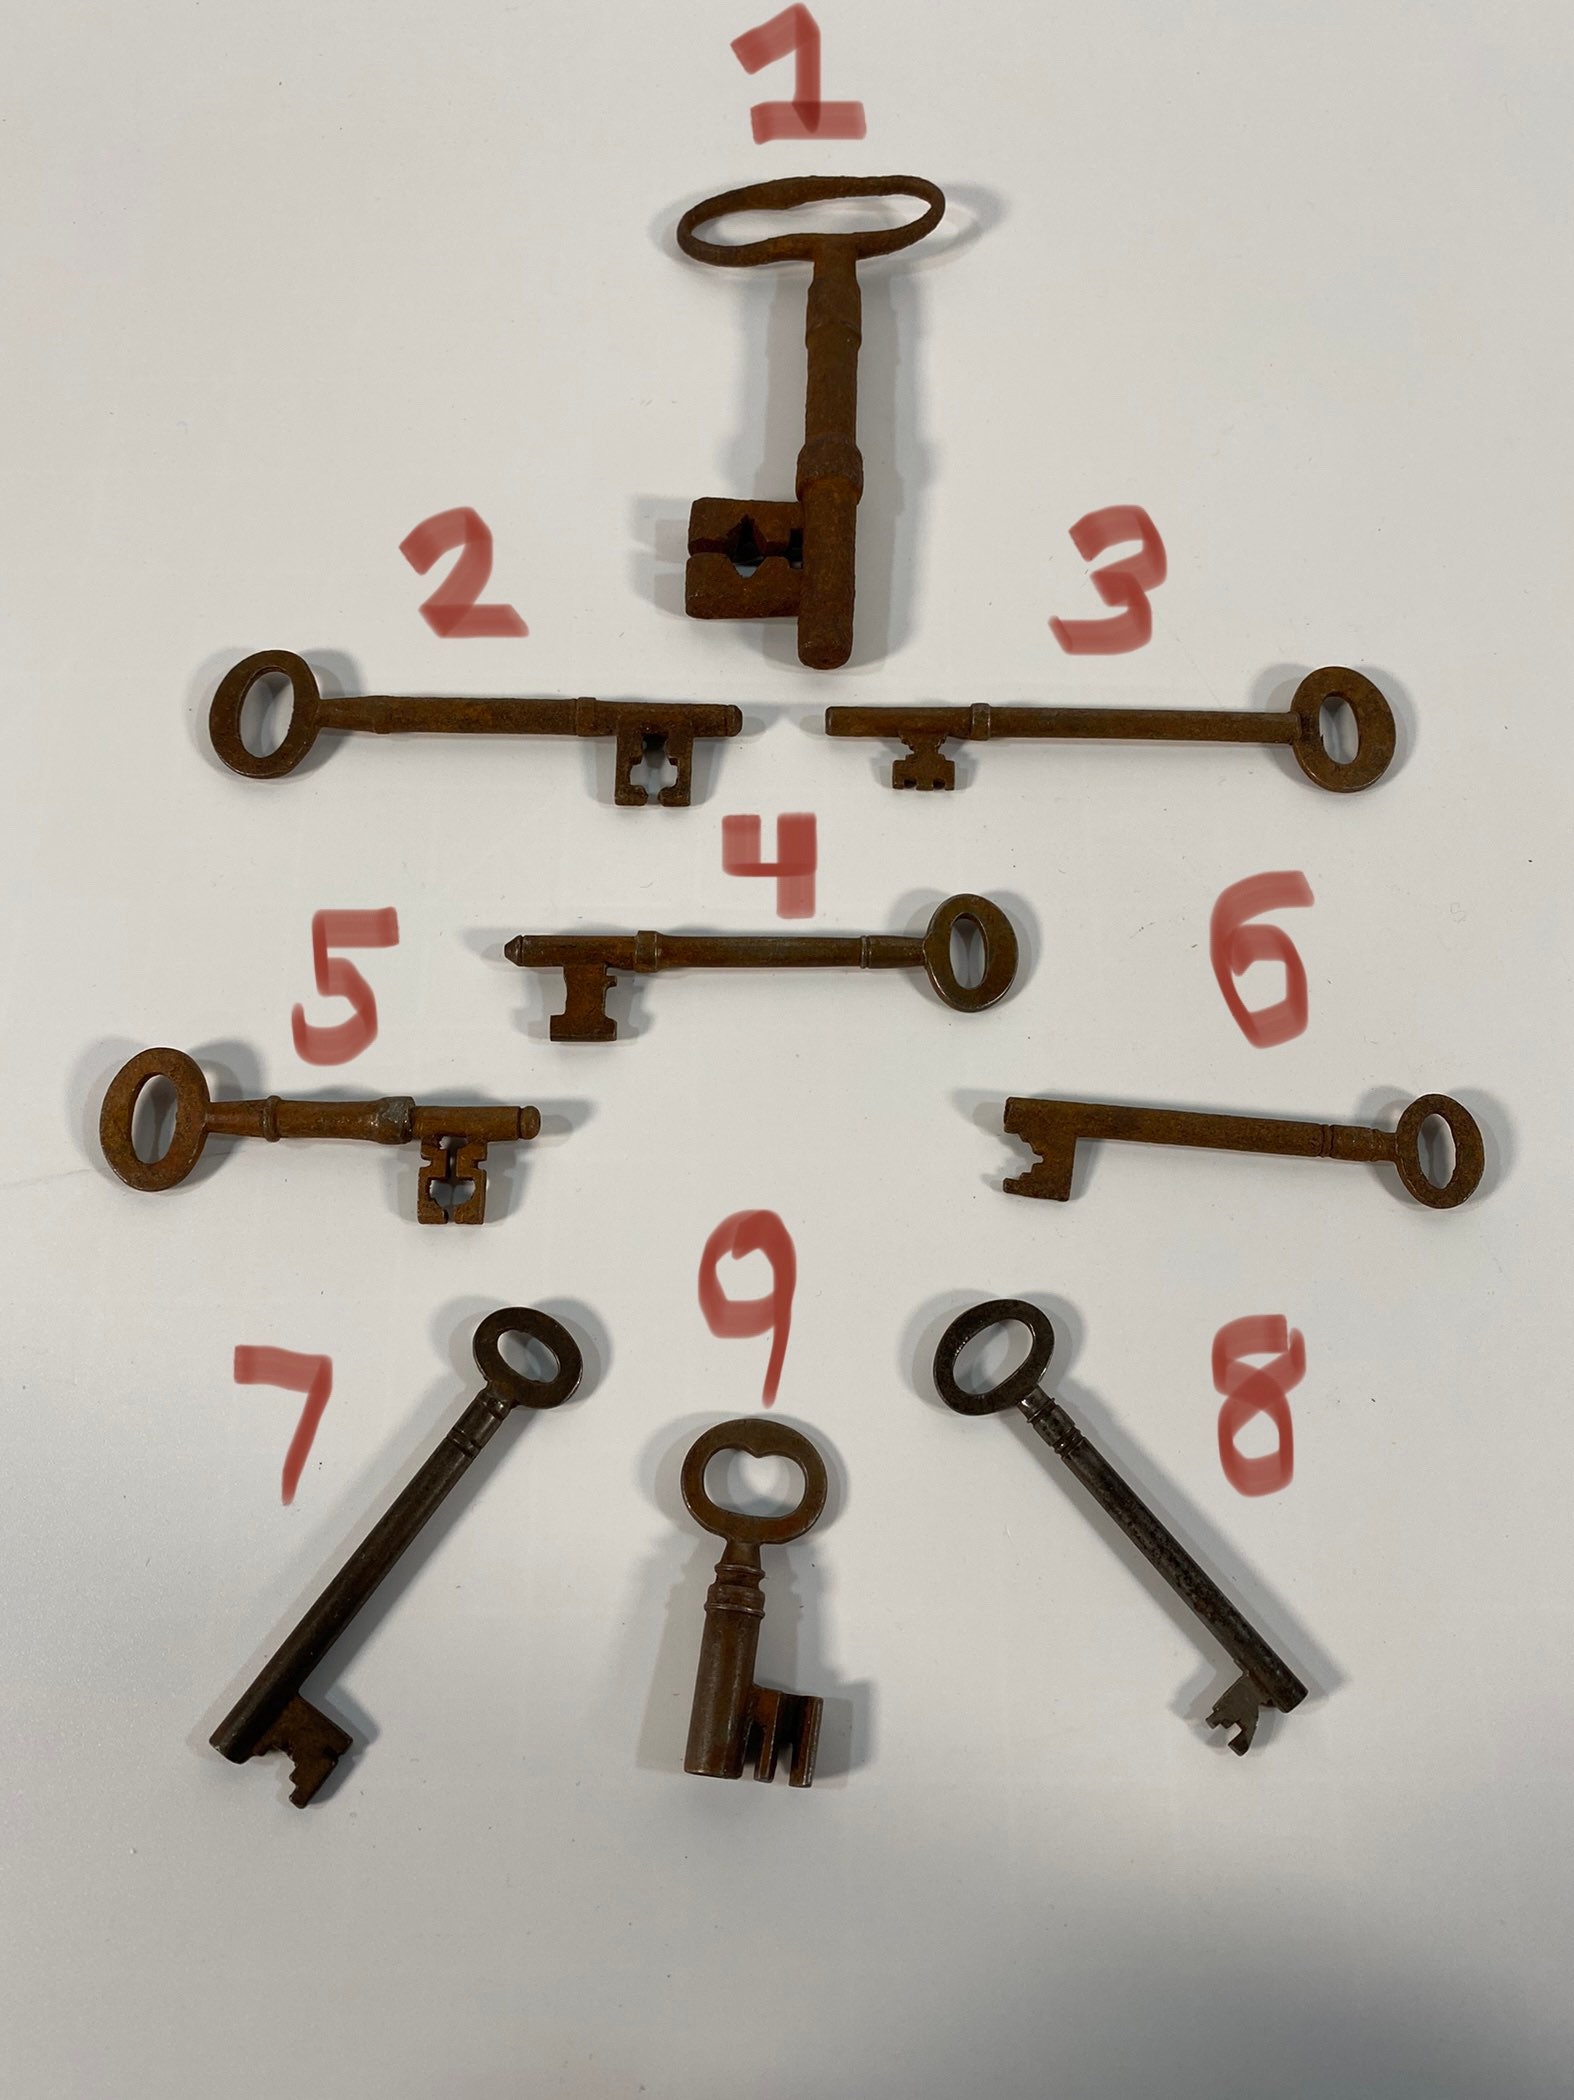 Real 1800s Skeleton Keys Purchase for 1 Key Authentic Bit Keys 